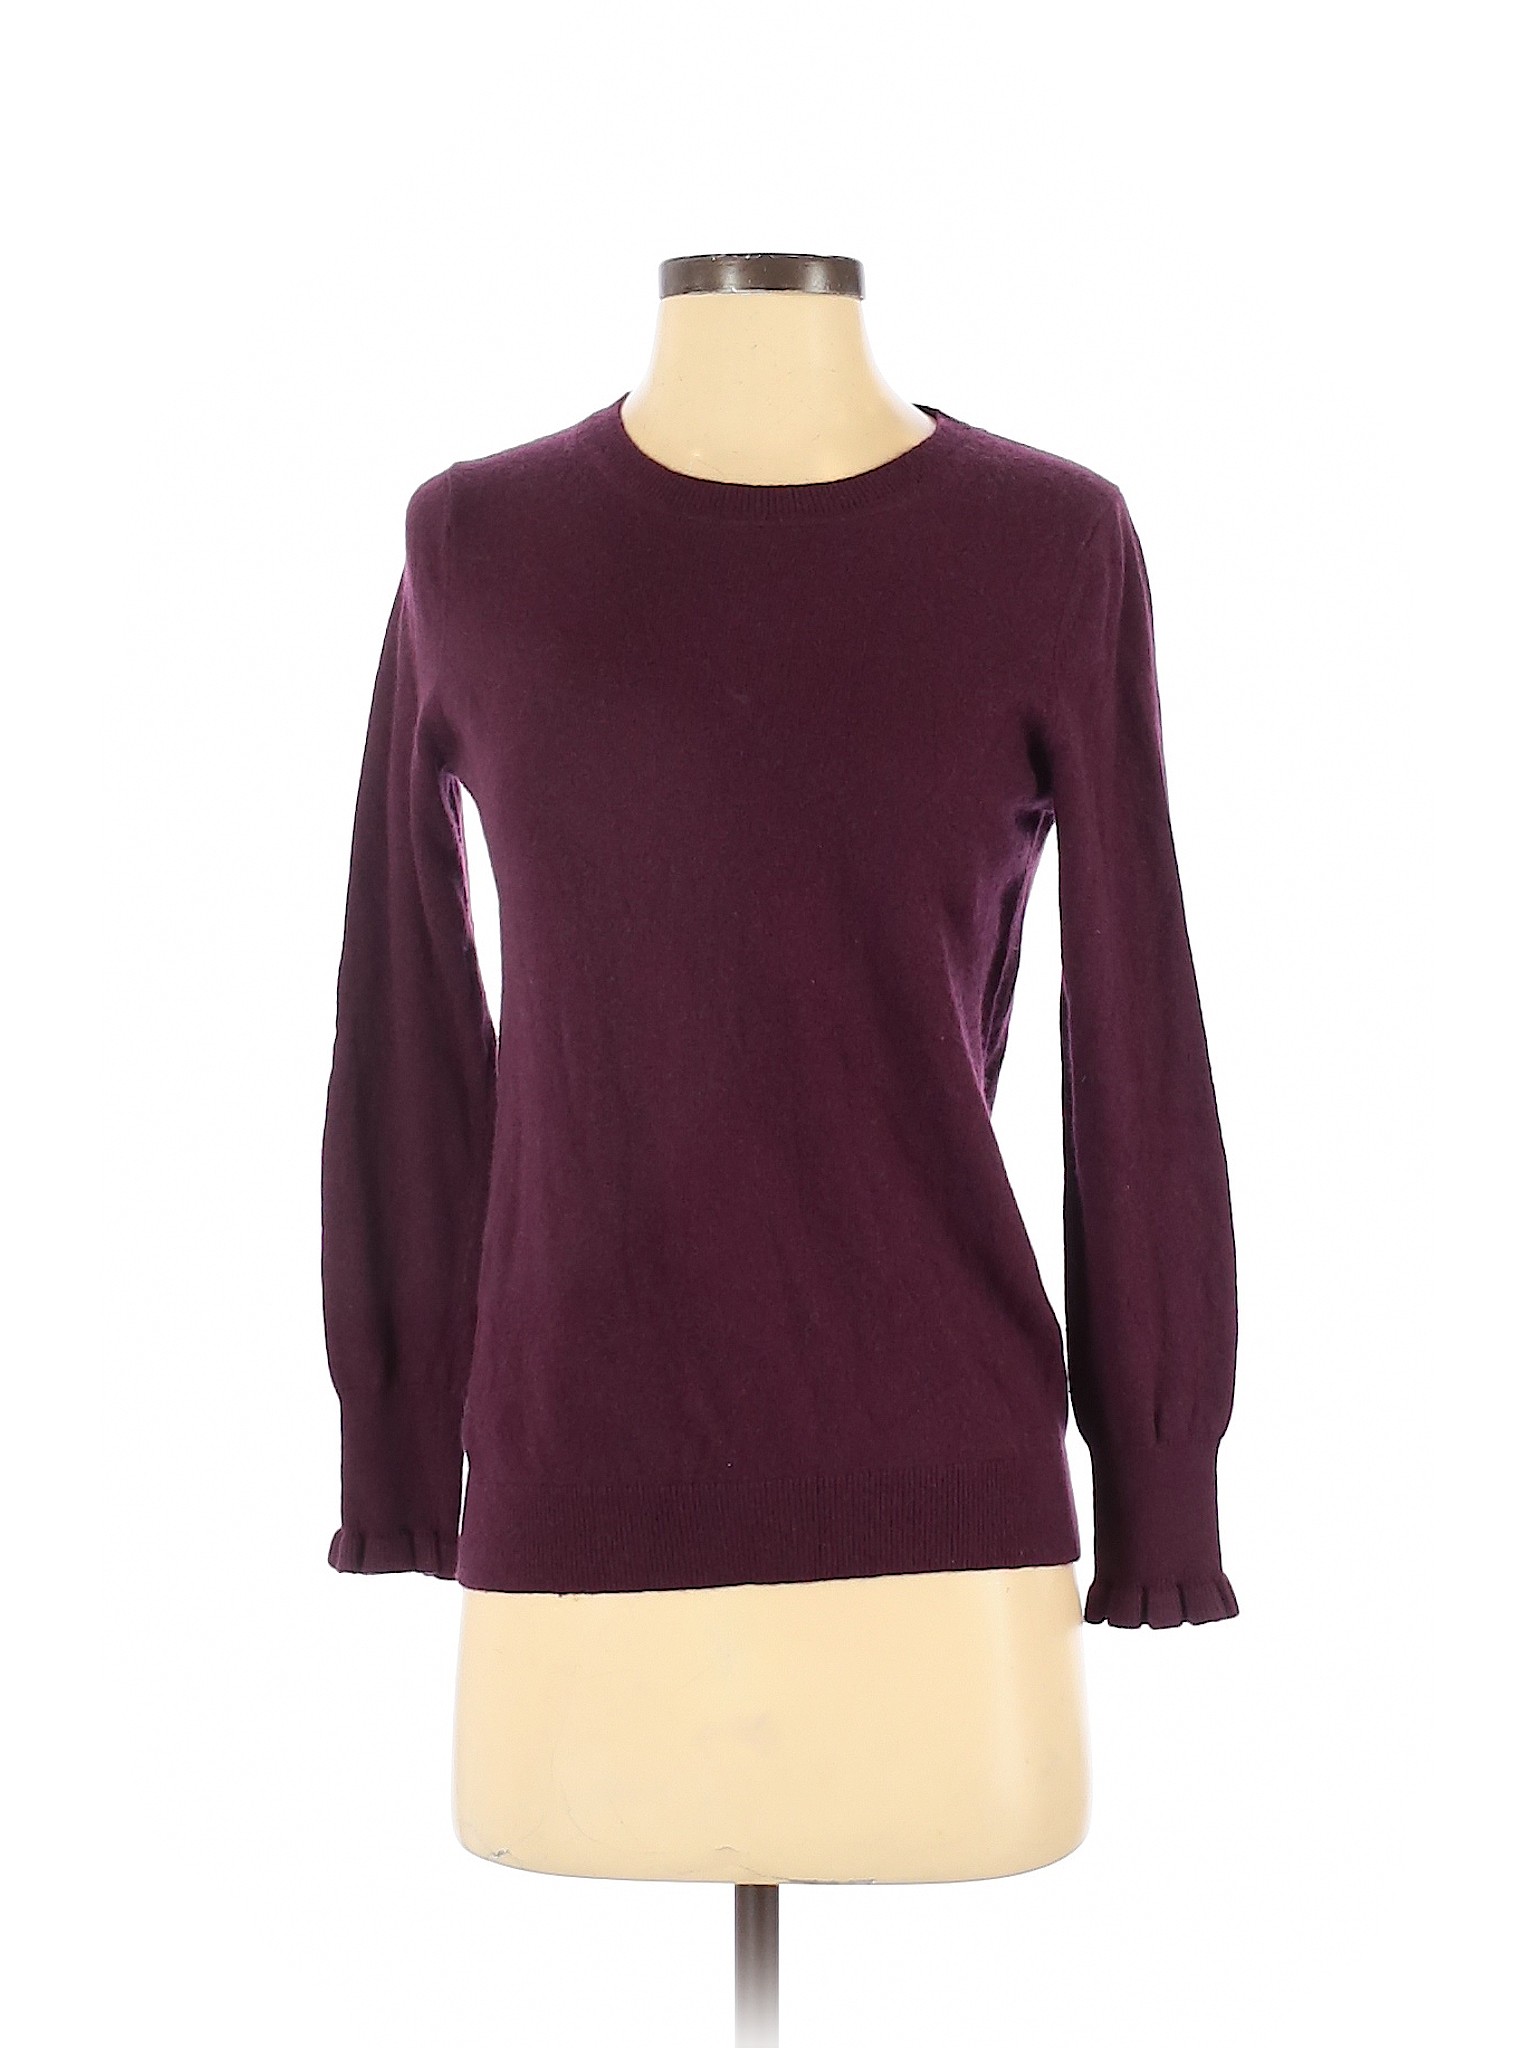 Banana Republic Women Purple Pullover Sweater S | eBay